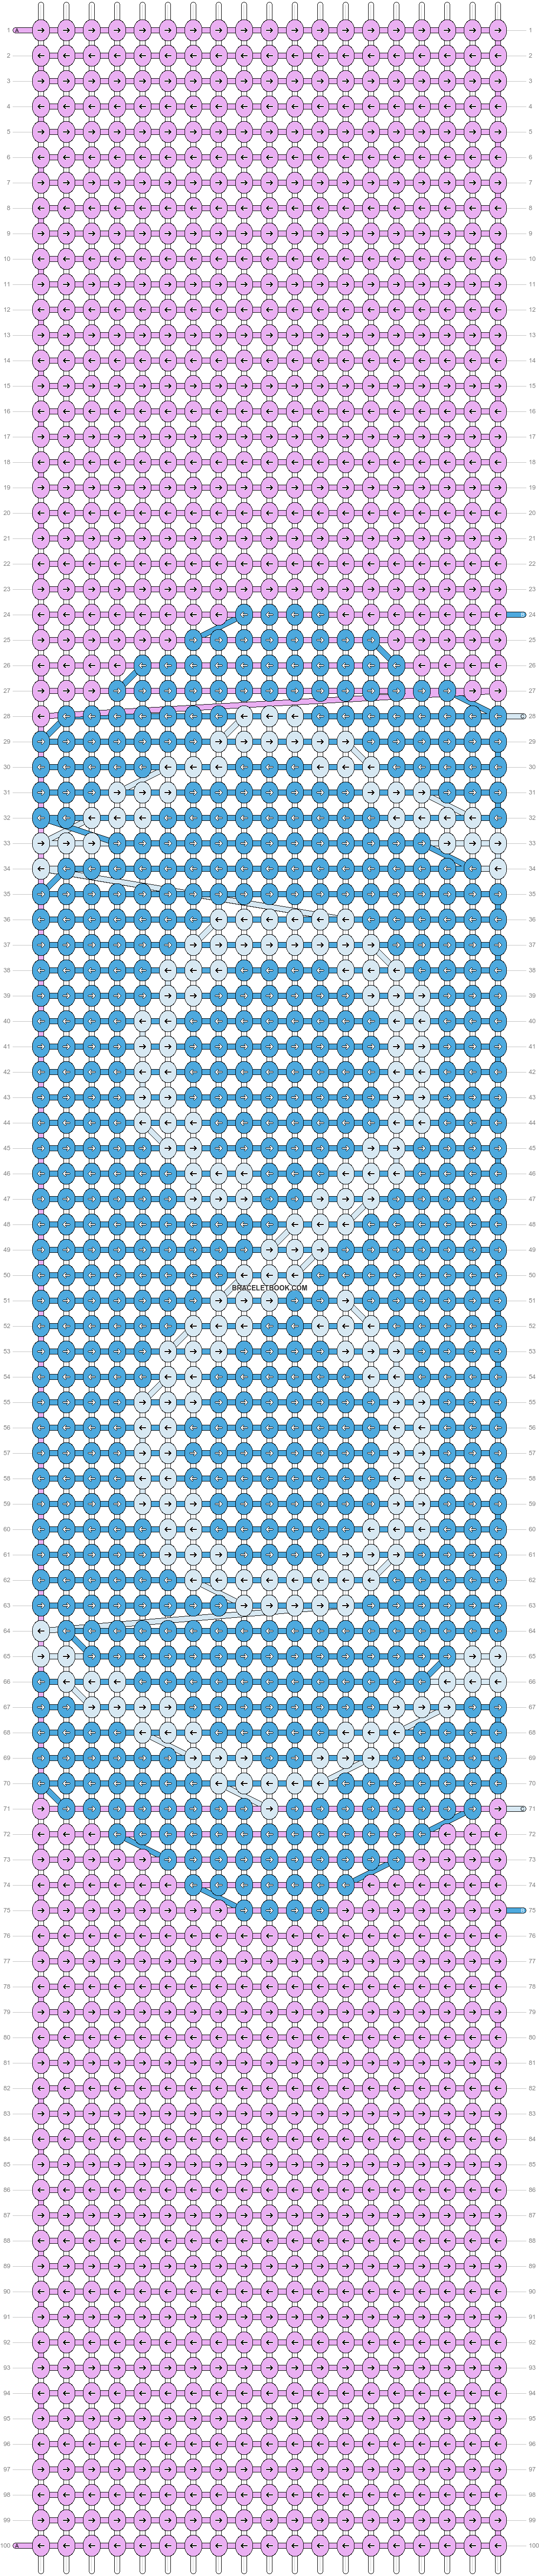 Alpha pattern #20827 variation #183956 pattern